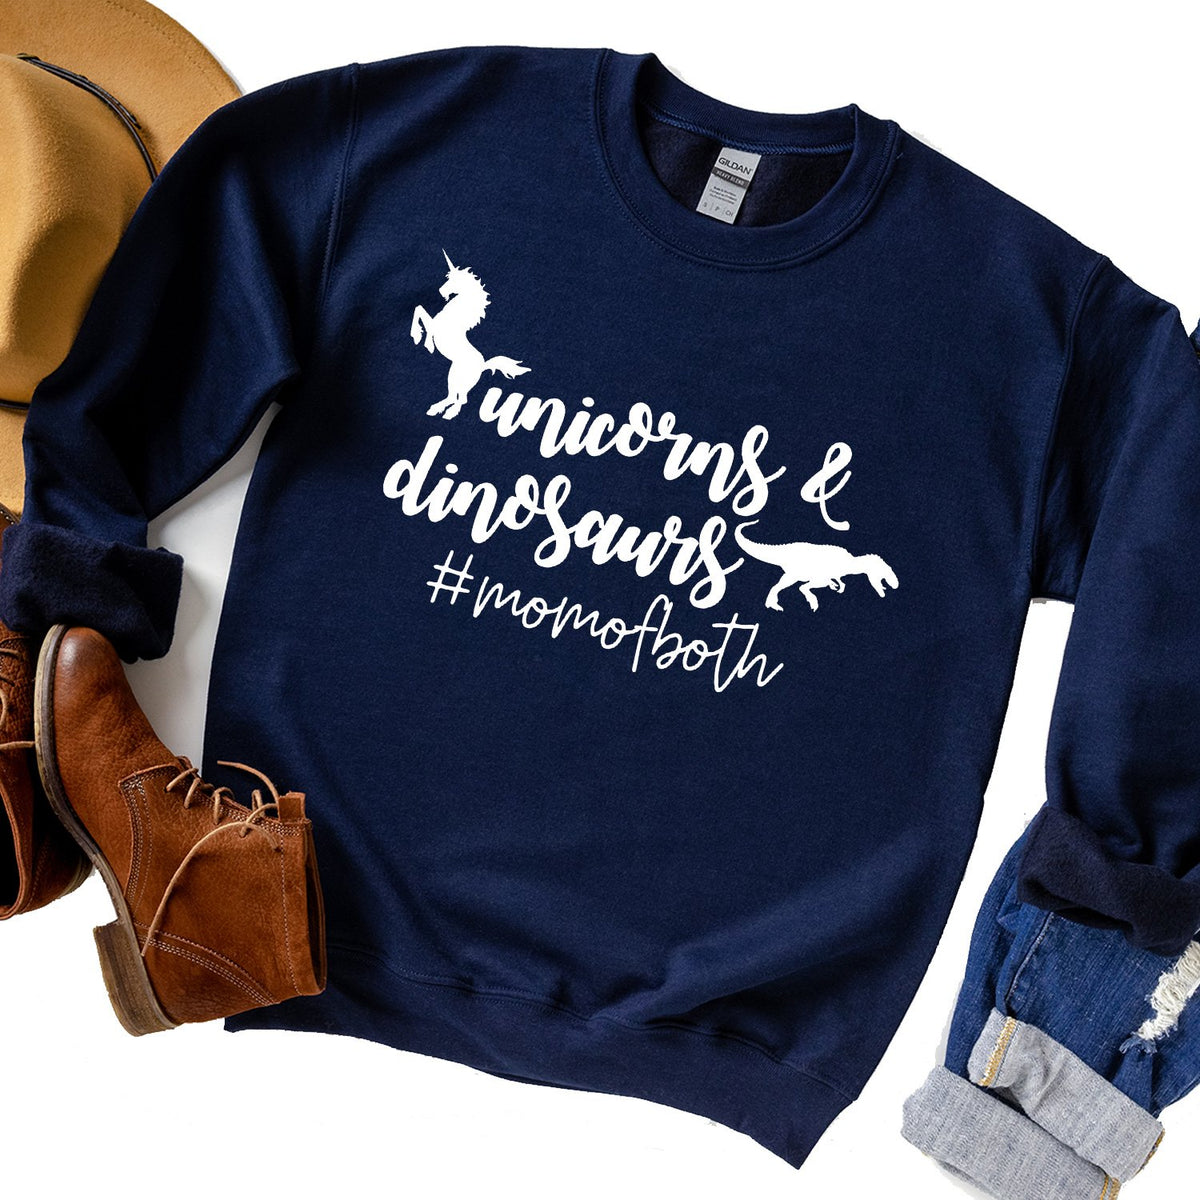 Unicorns &amp; Dinosaurs #MomOfBoth - Long Sleeve Heavy Crewneck Sweatshirt